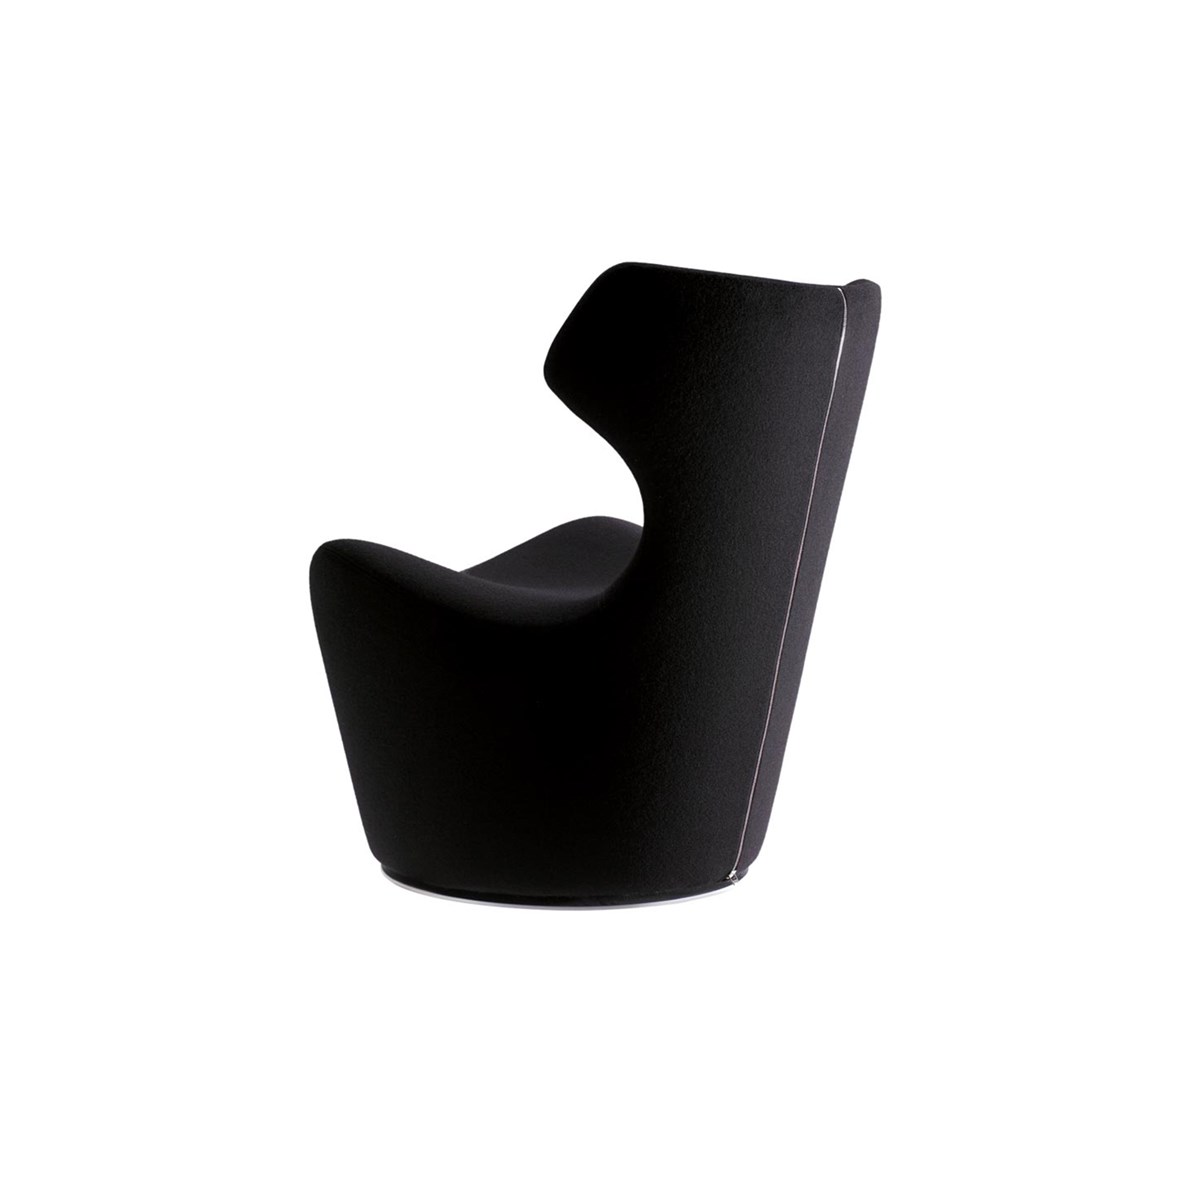 B&B-Italia-Naoto-Fukasawa-Papilio-Armchair-Mini-Chair-Matisse-3